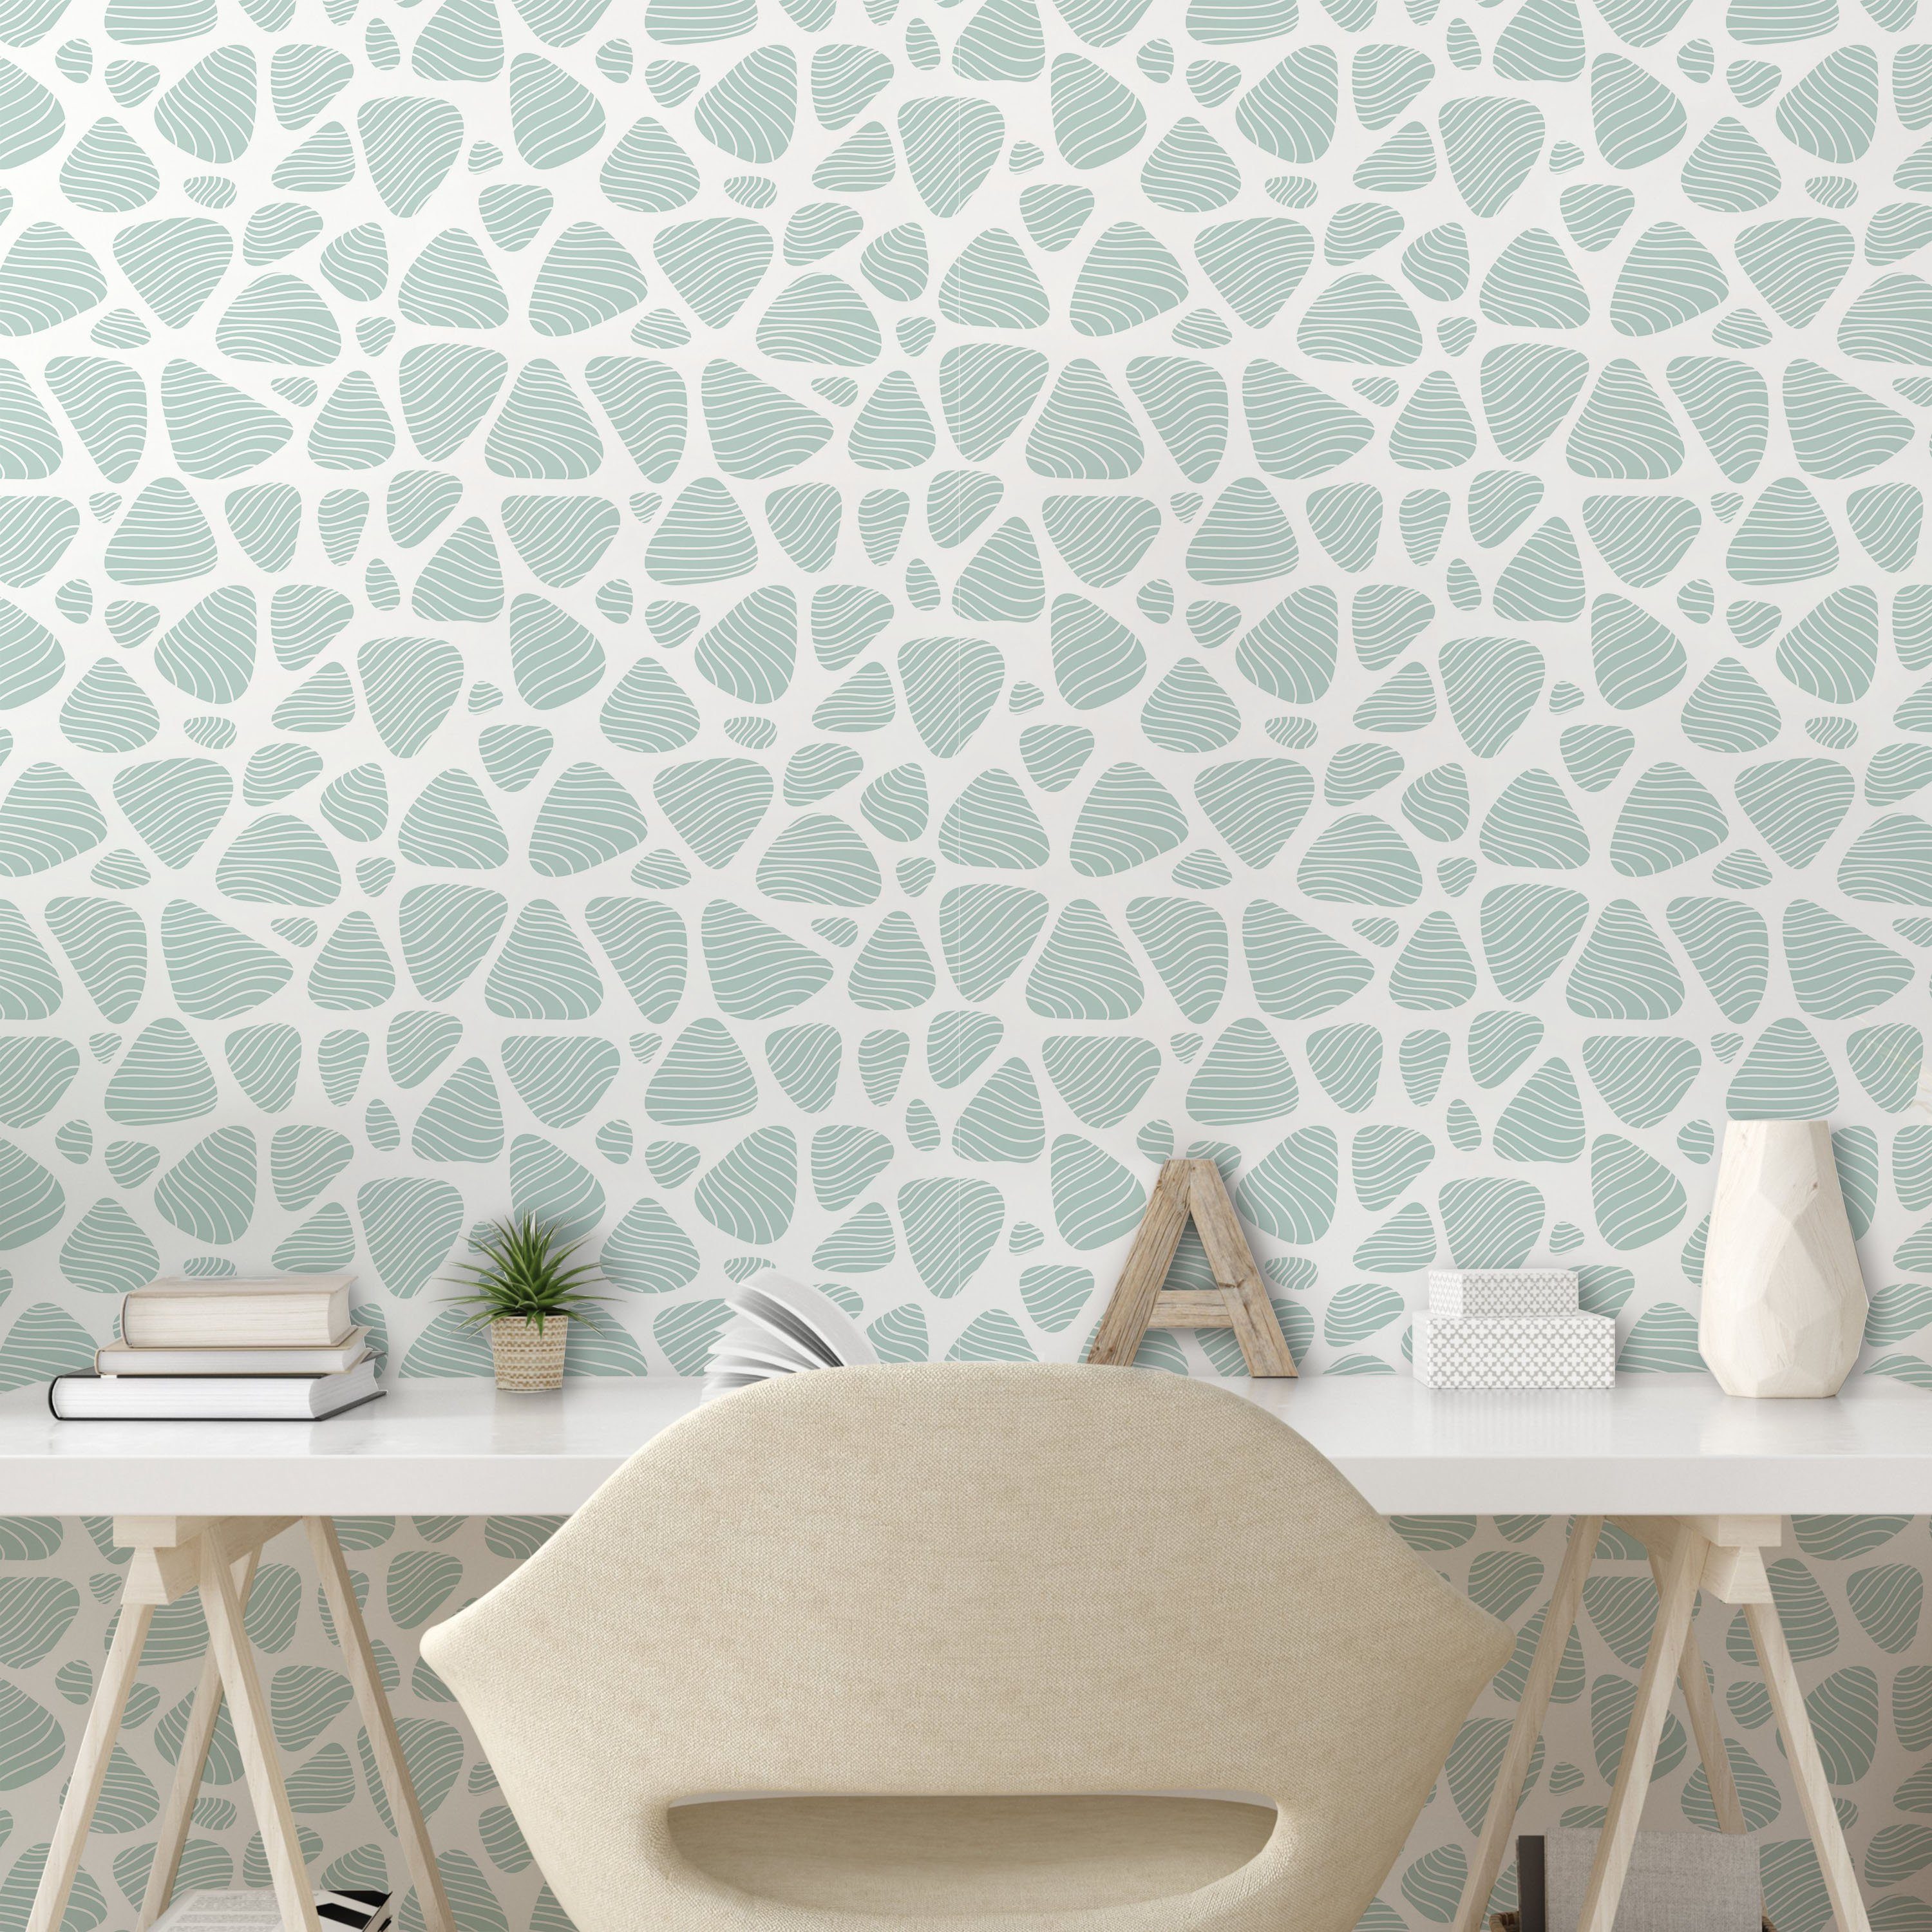 Abakuhaus Vinyltapete neutrale Shapes Pebble Küchenakzent, selbstklebendes Farbe Wie Wohnzimmer